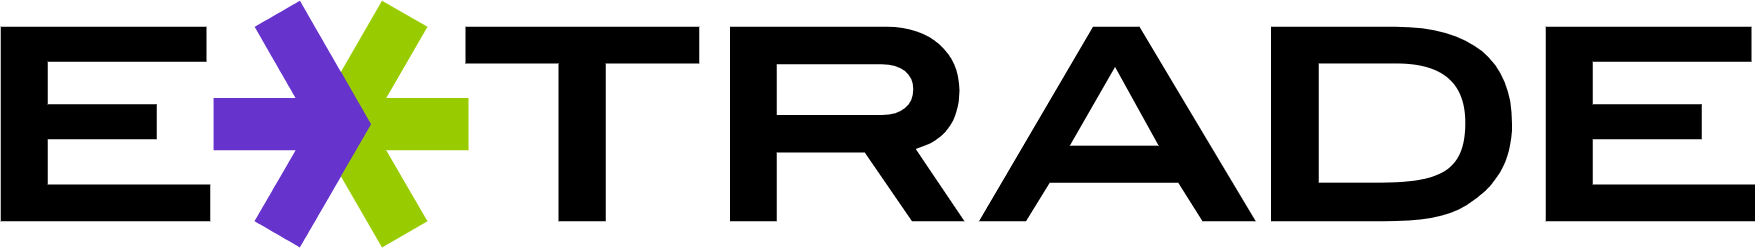 E-Trade
 logo large (transparent PNG)